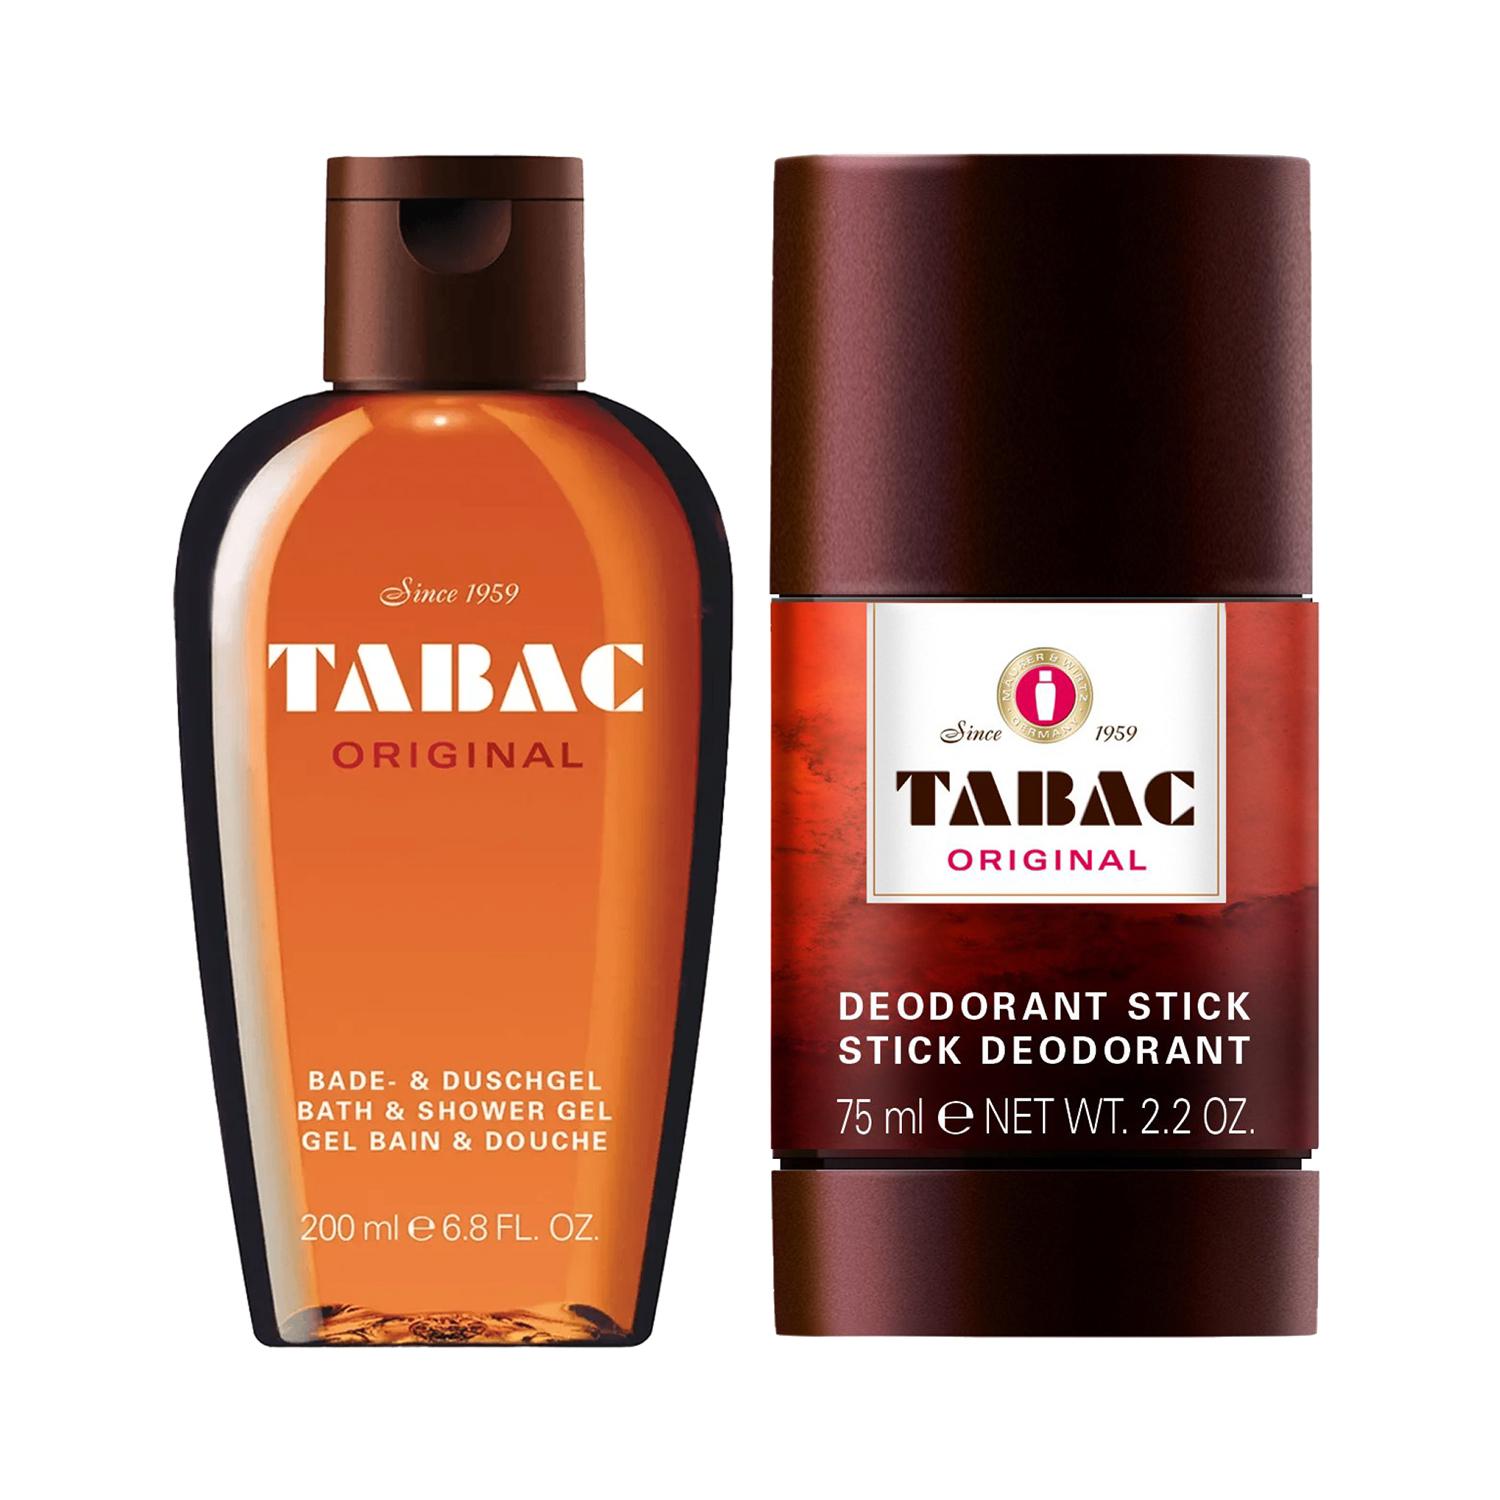 Tabac Original Bath & Shower Gel (200 ml) & Original Deo Roll On (75 ml) Combo